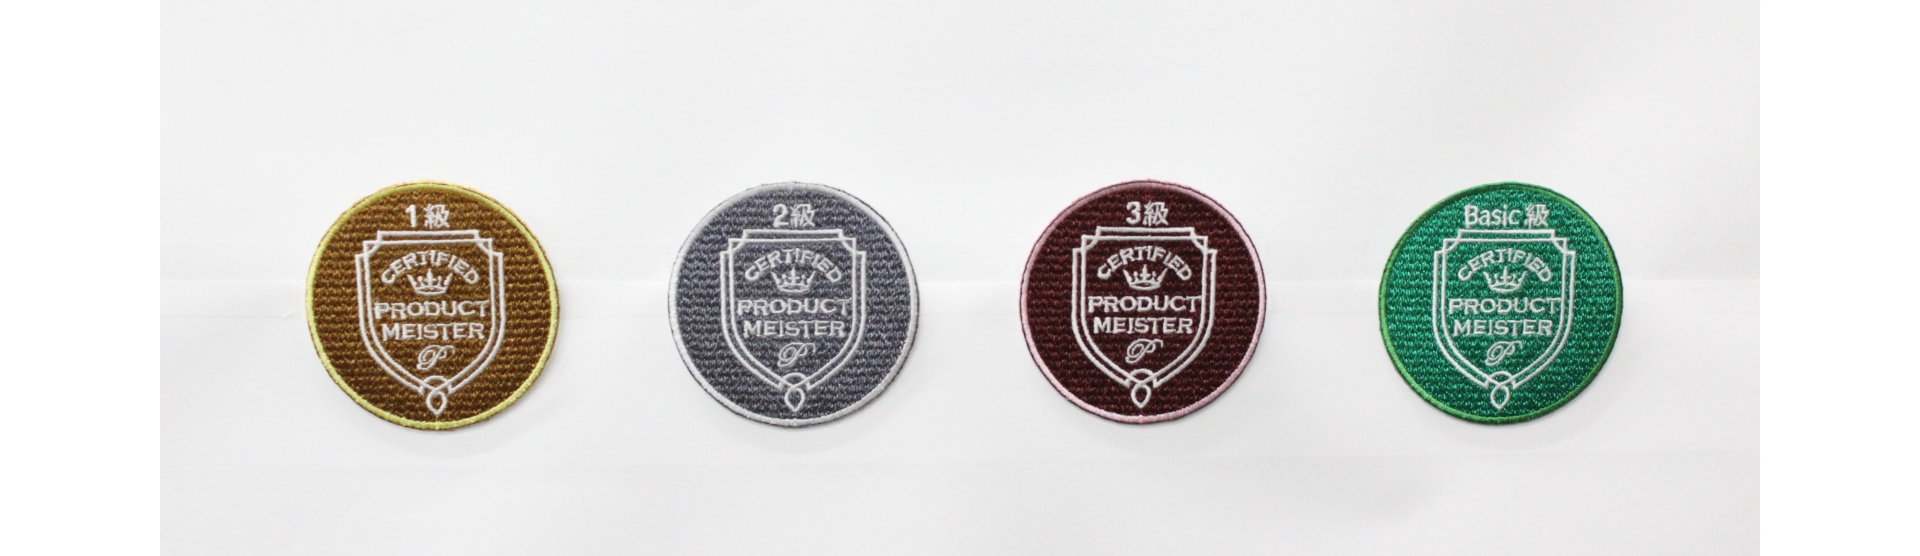 Production Meister original badges